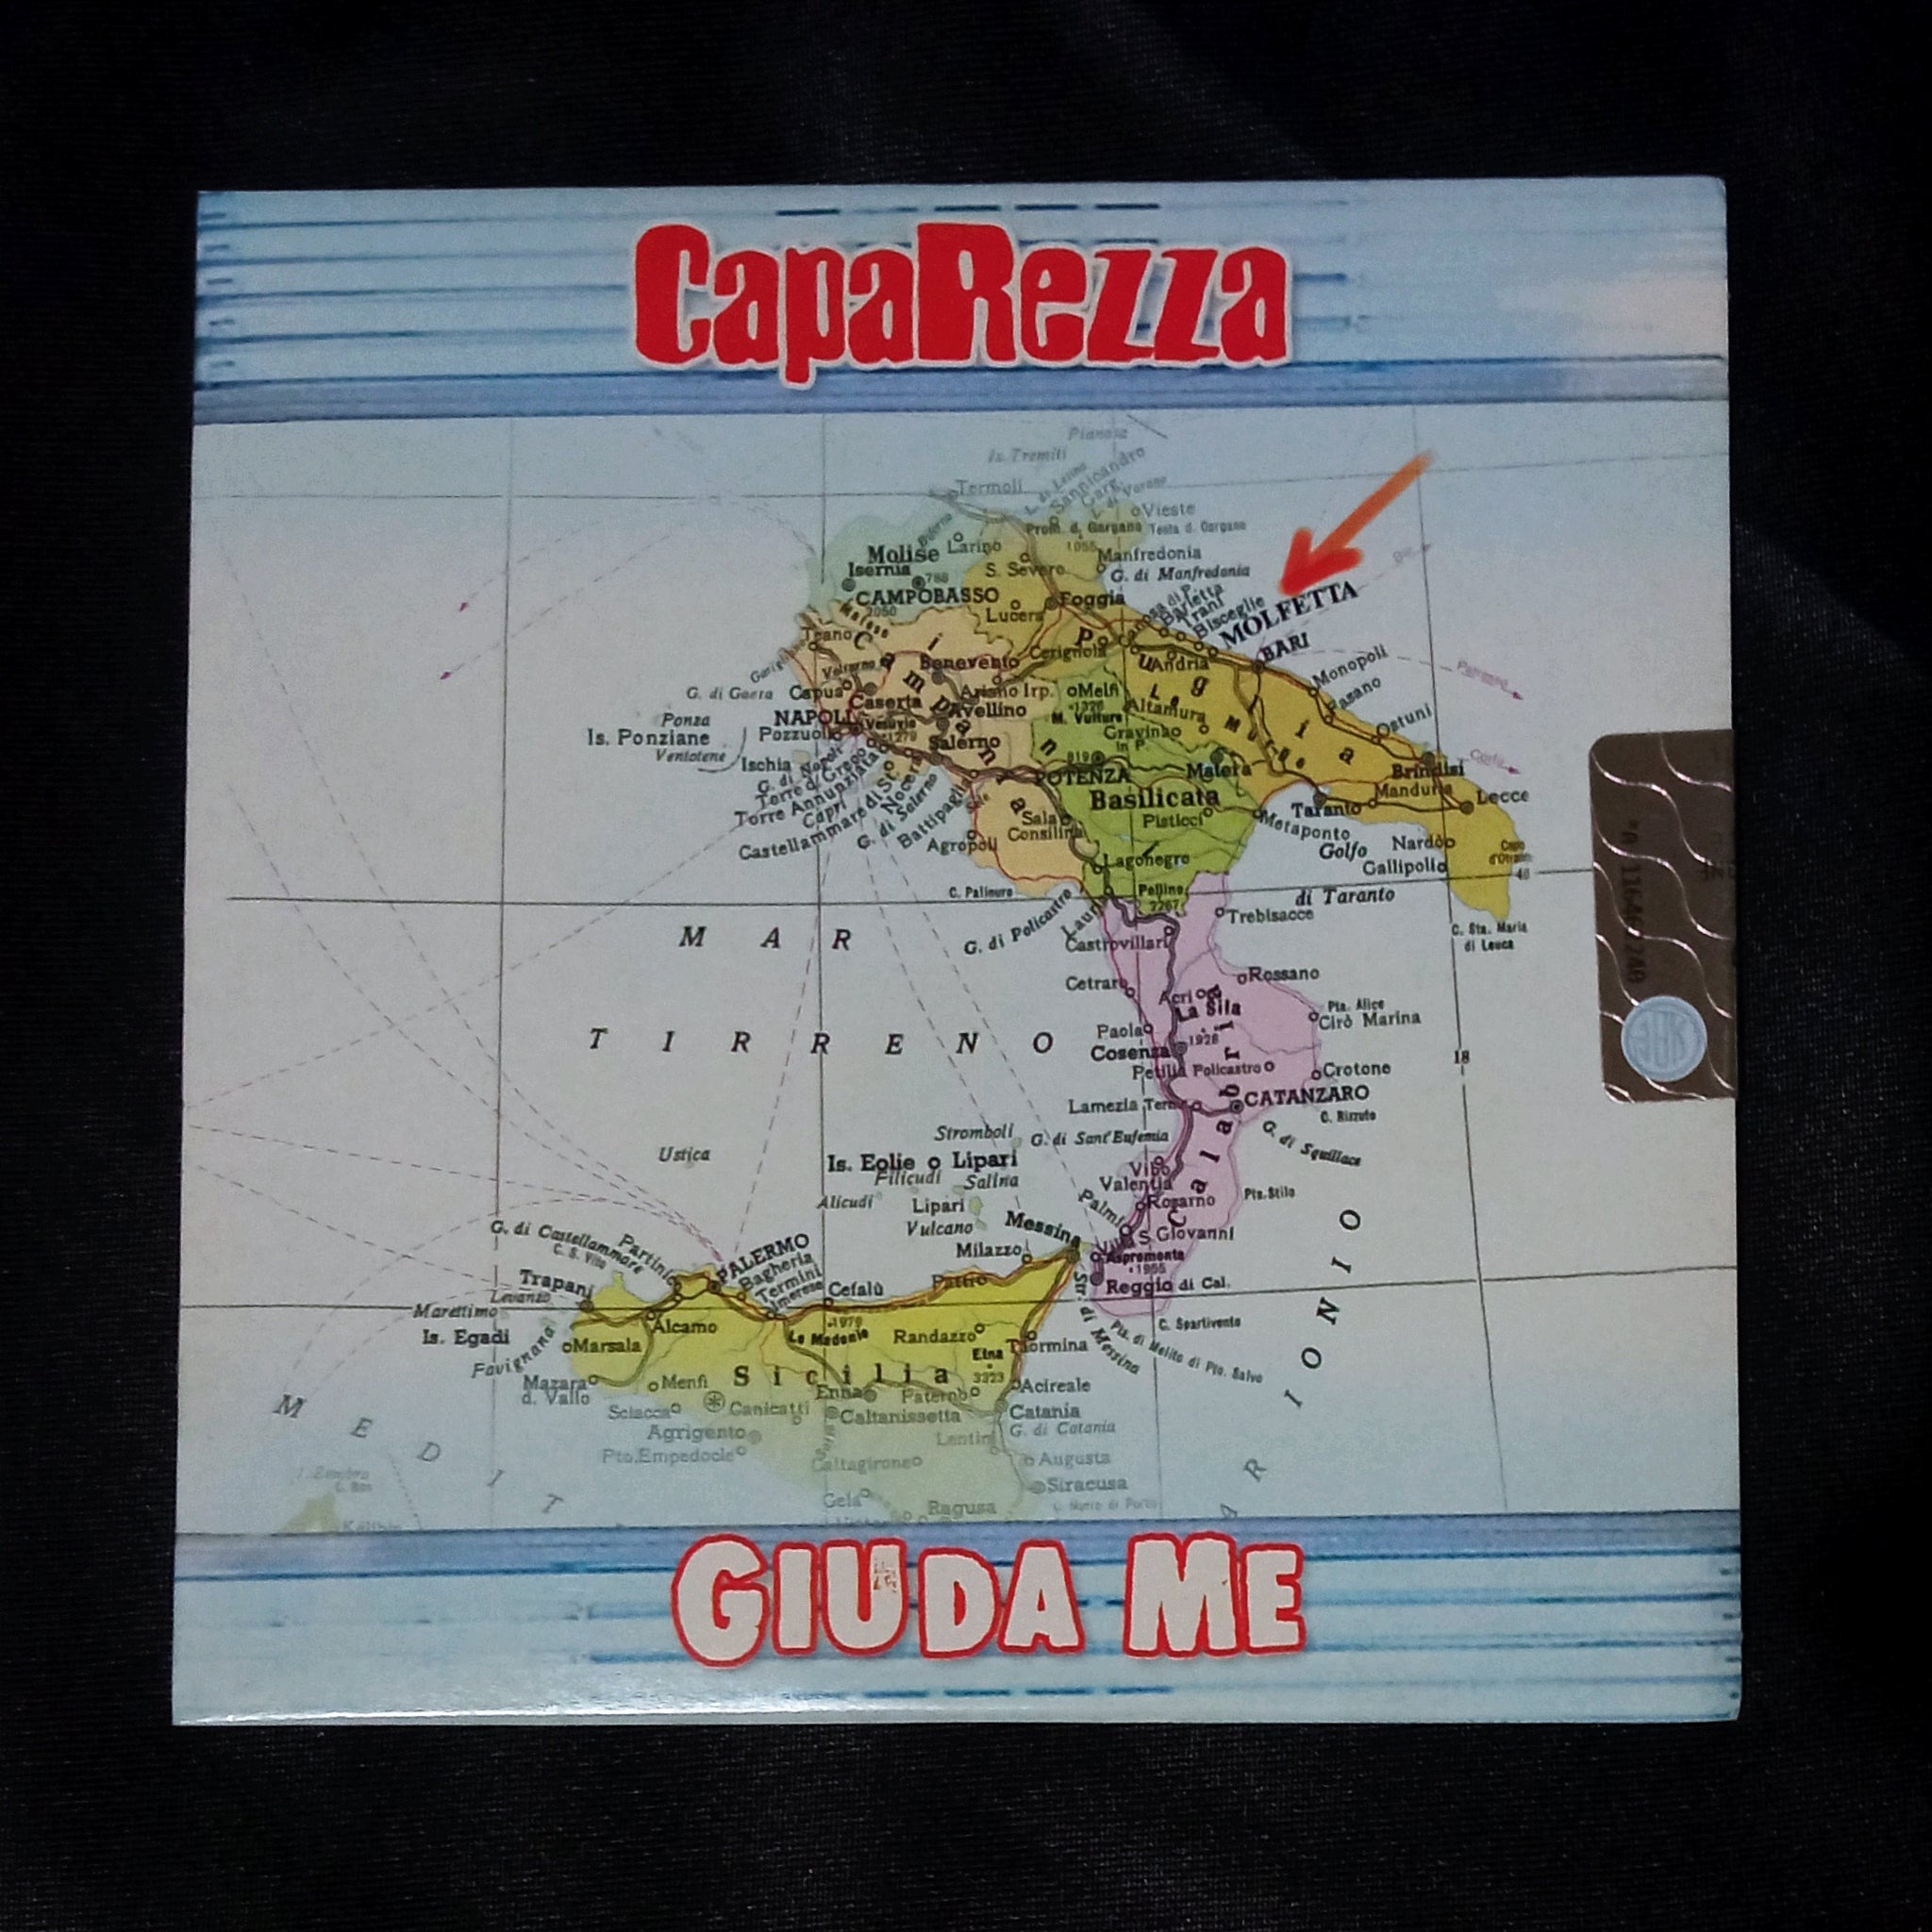 CD - CAPAREZZA - GIUDA ME